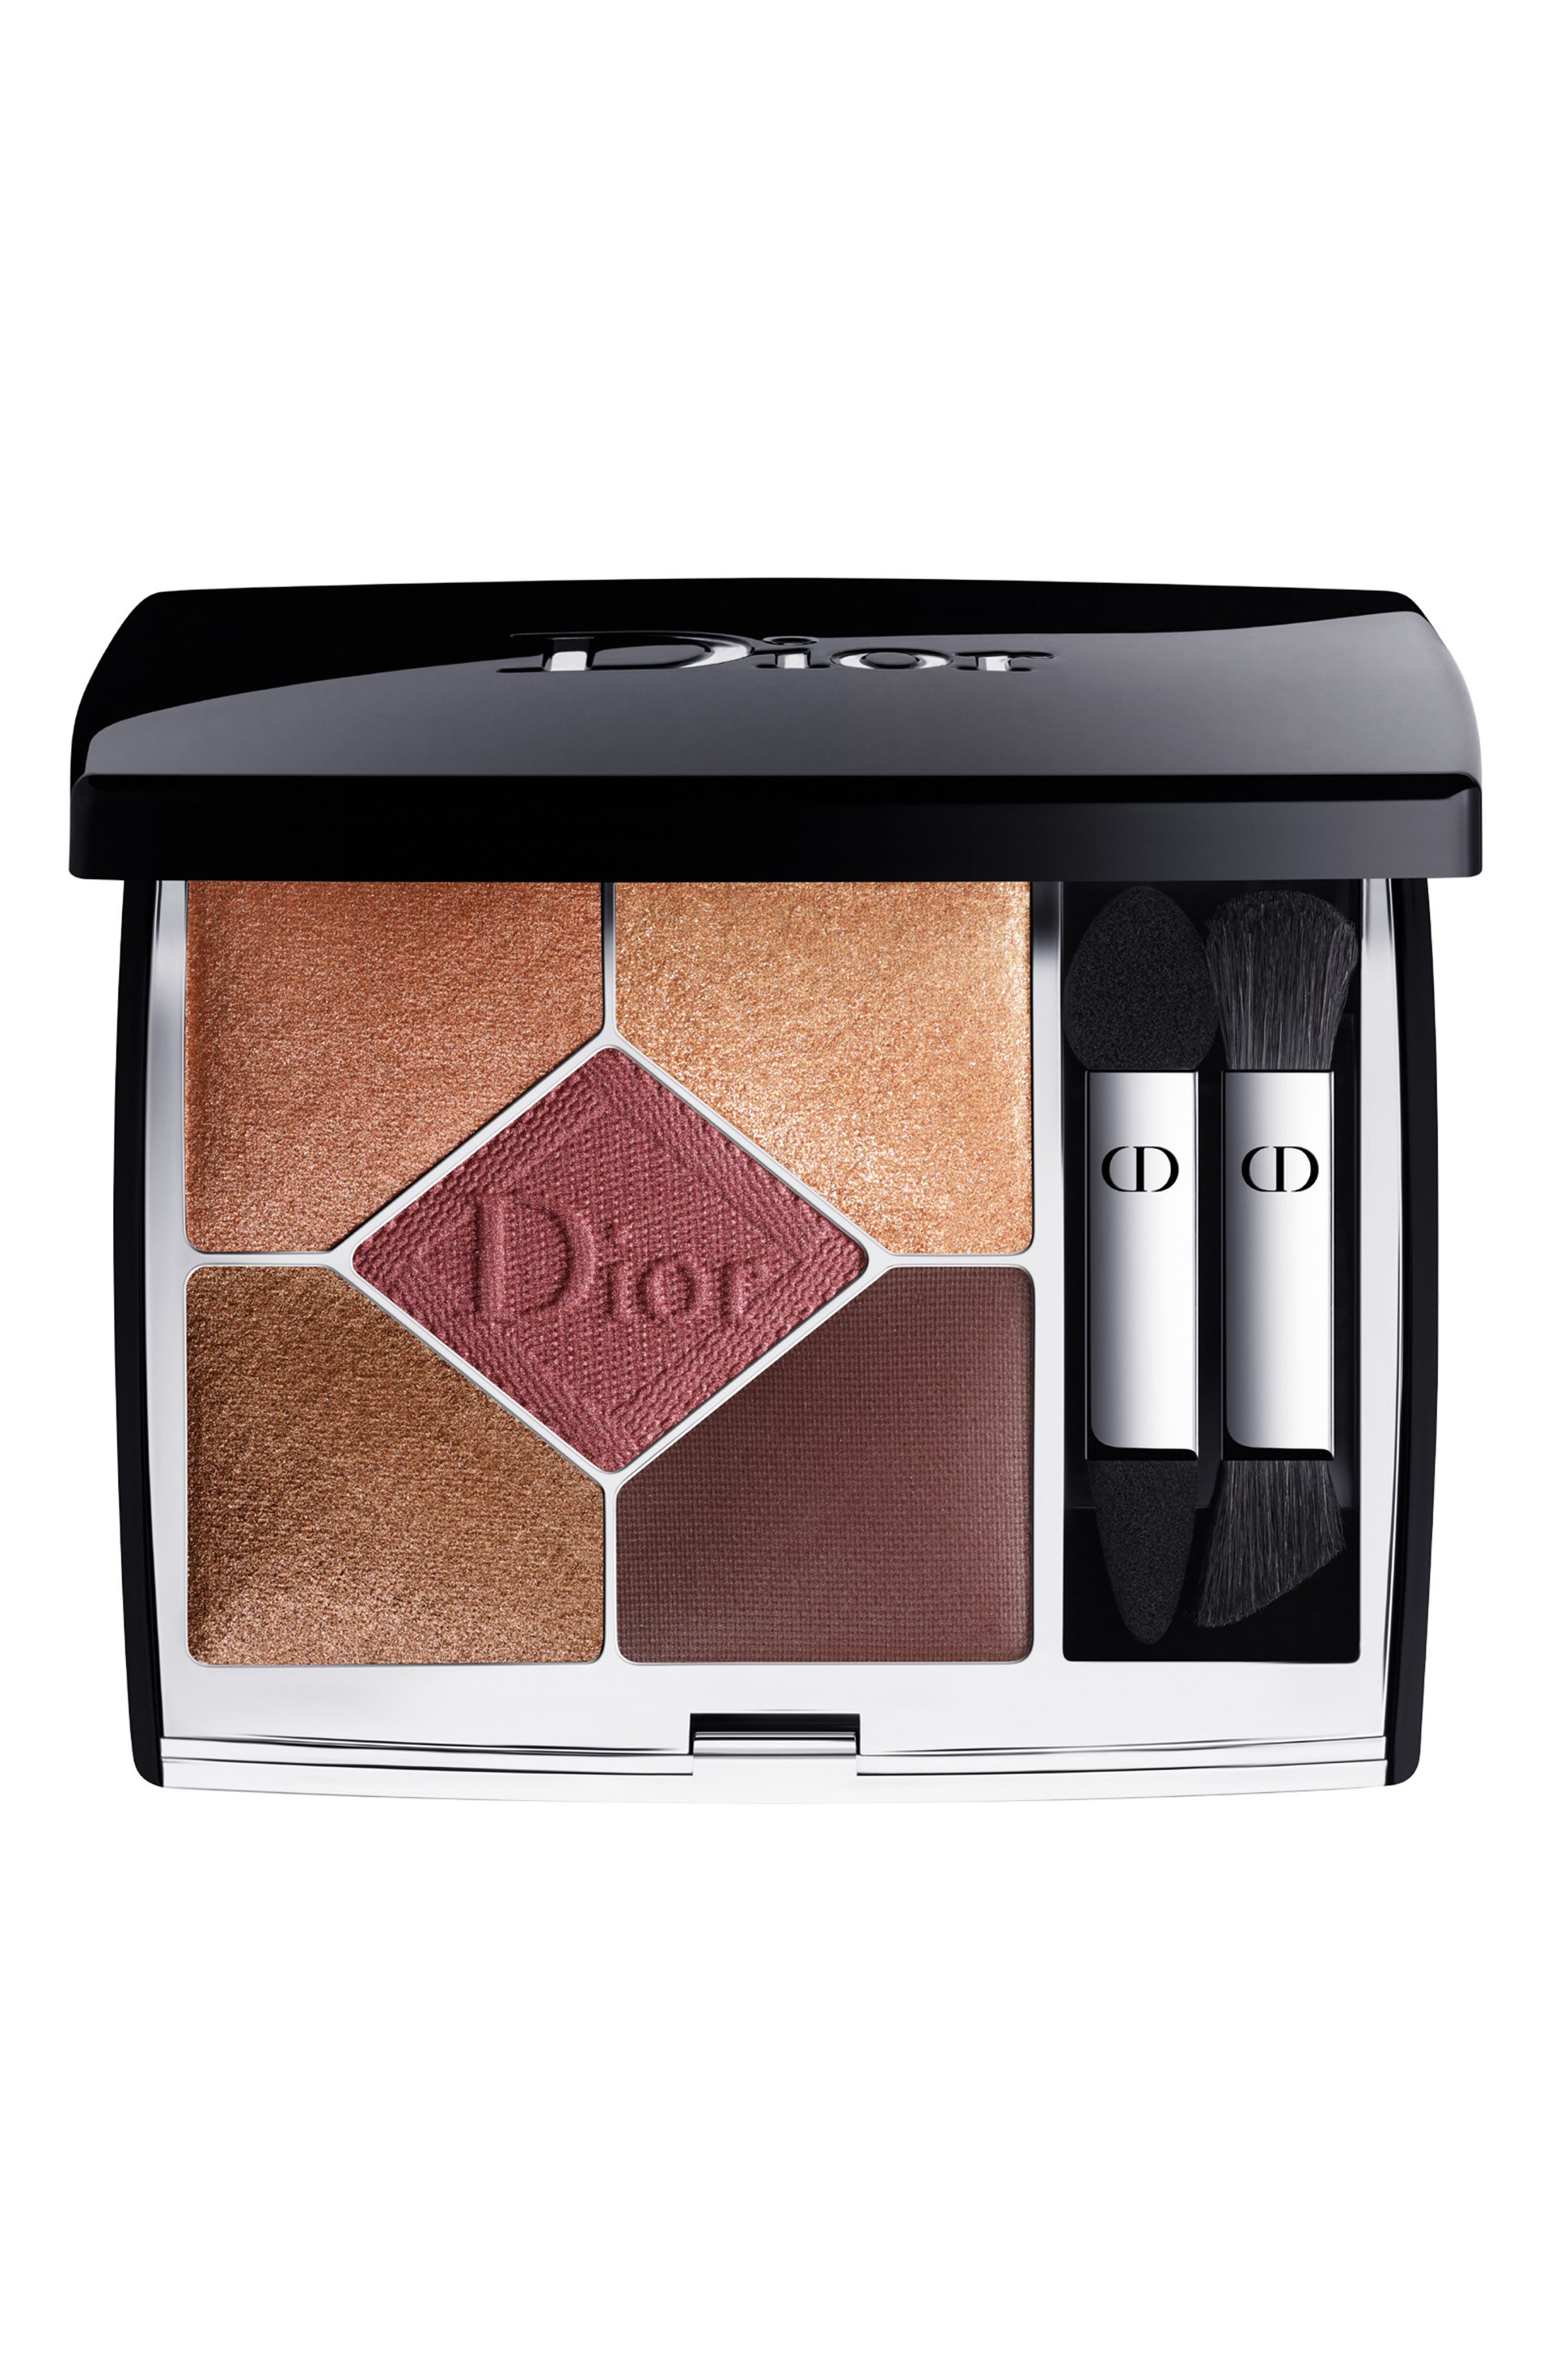 Dior 5 Couleurs Couture Eyeshadow Palette in 689 Mitzah